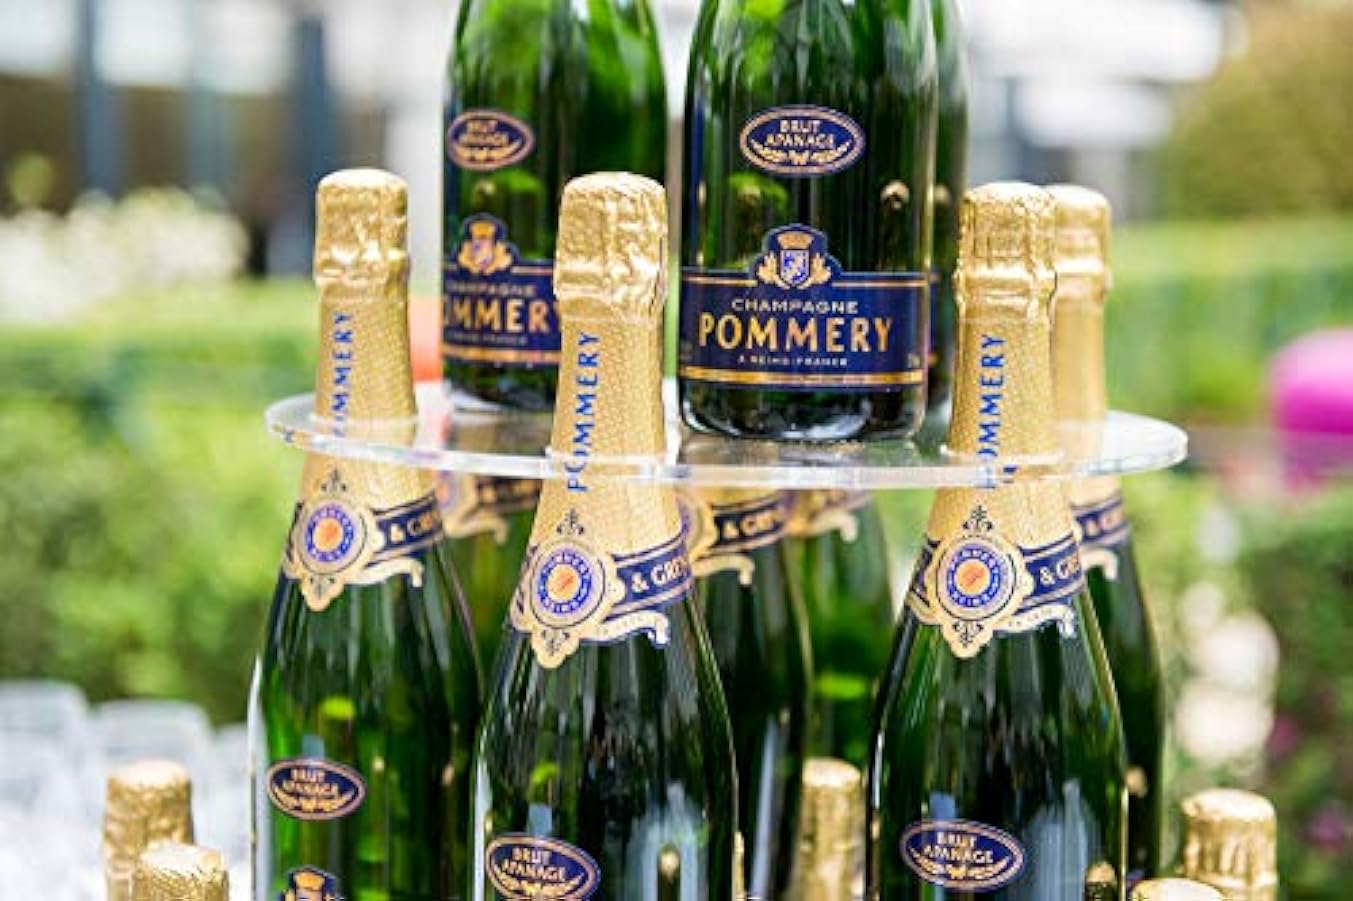 Champagne Pommery Brut Apanage 0,75 lt. 290270626